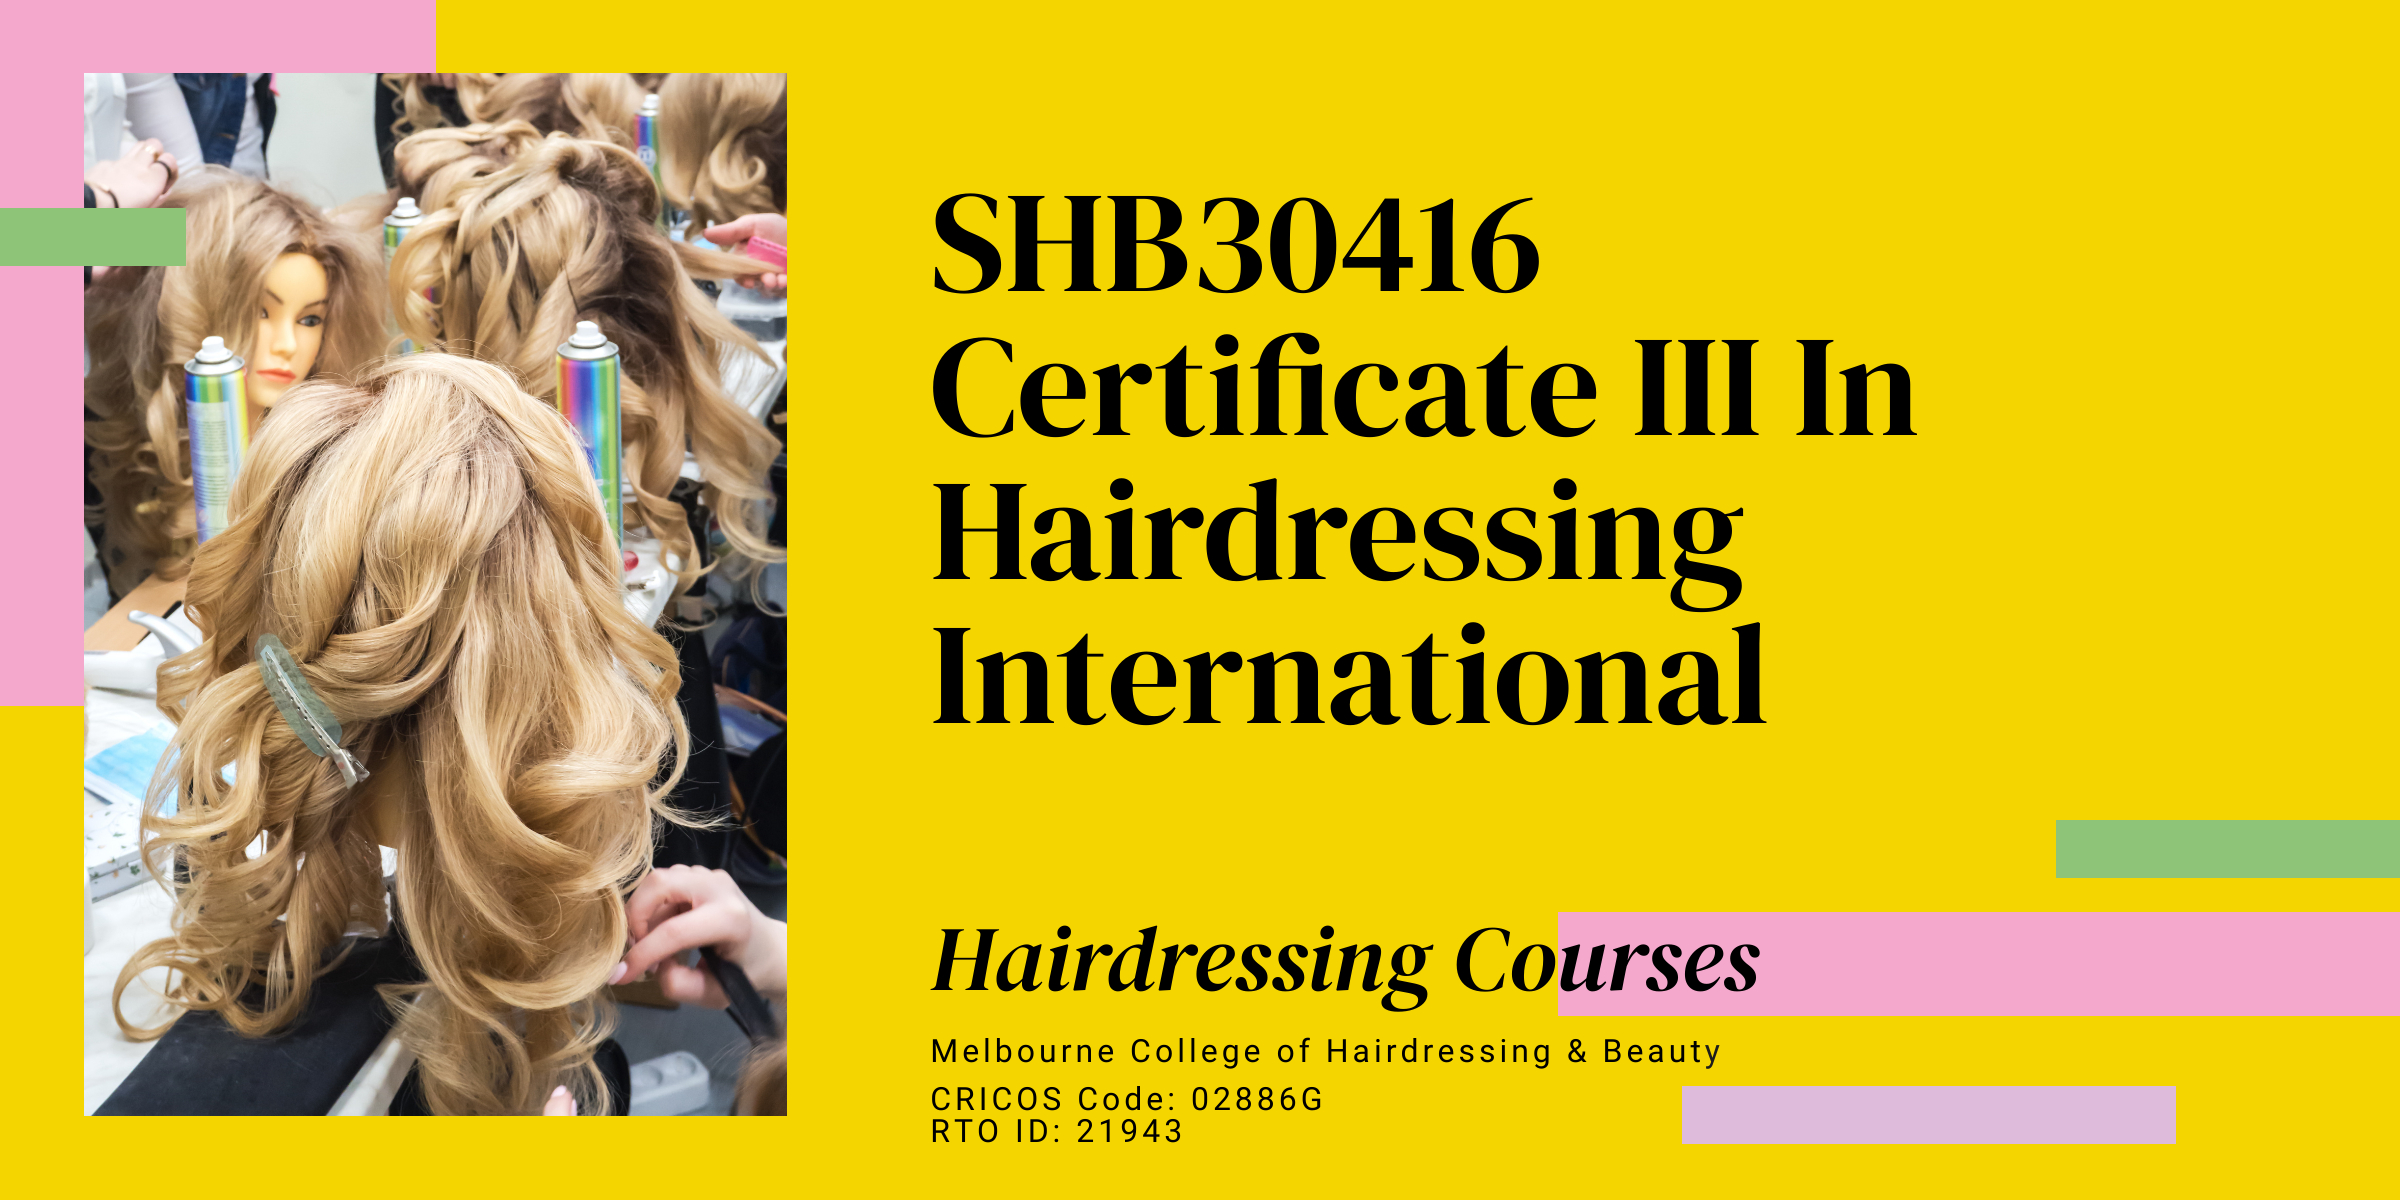 SHB30416 Certificate III In Hairdressing International 